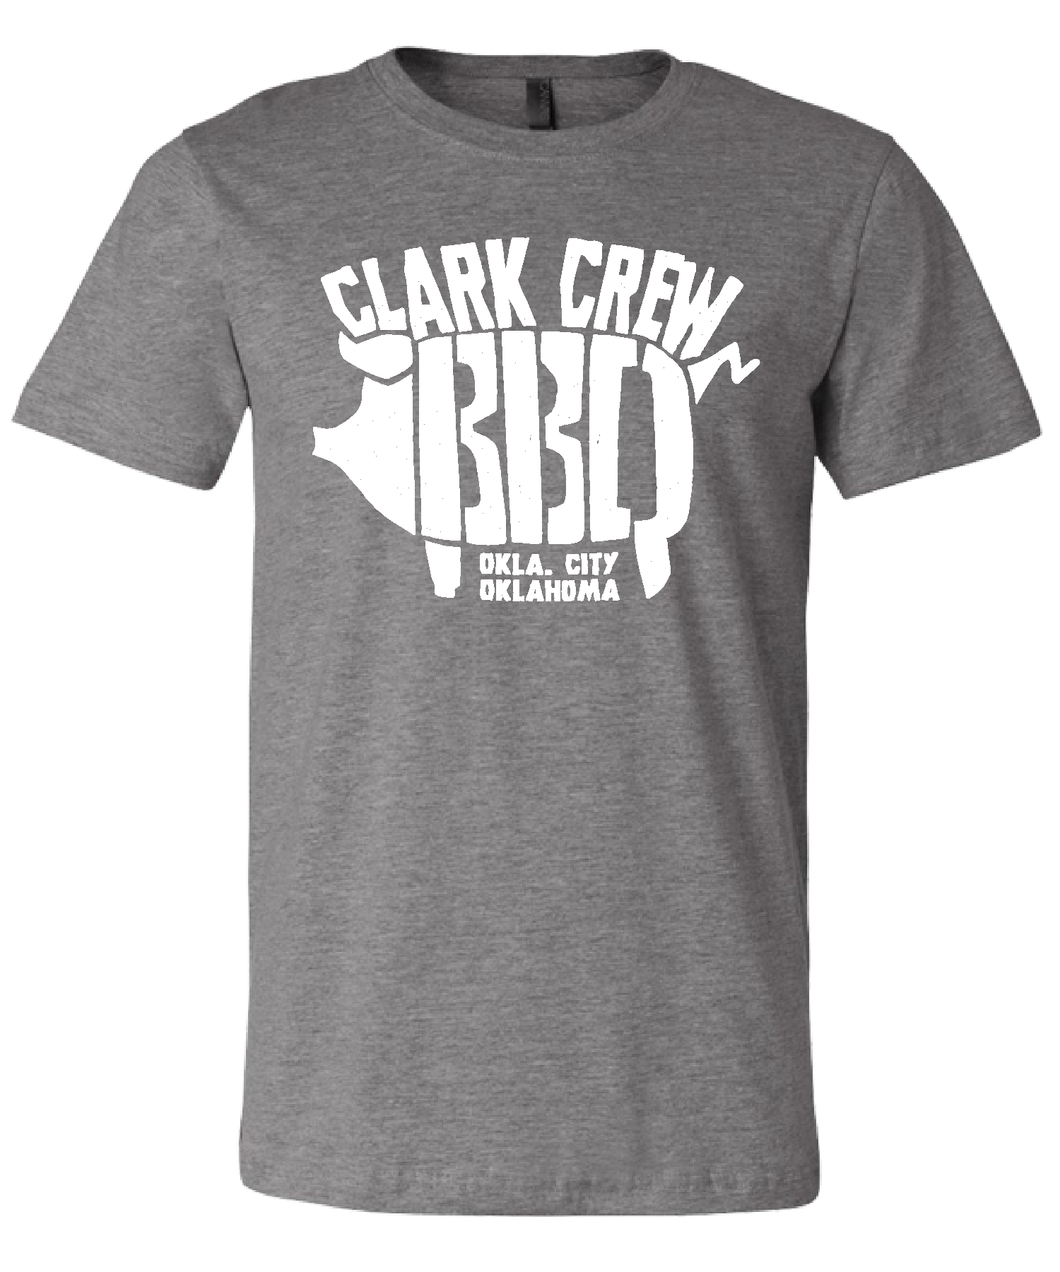 Clark Crew BBQ Cotton Crew T-Shirt